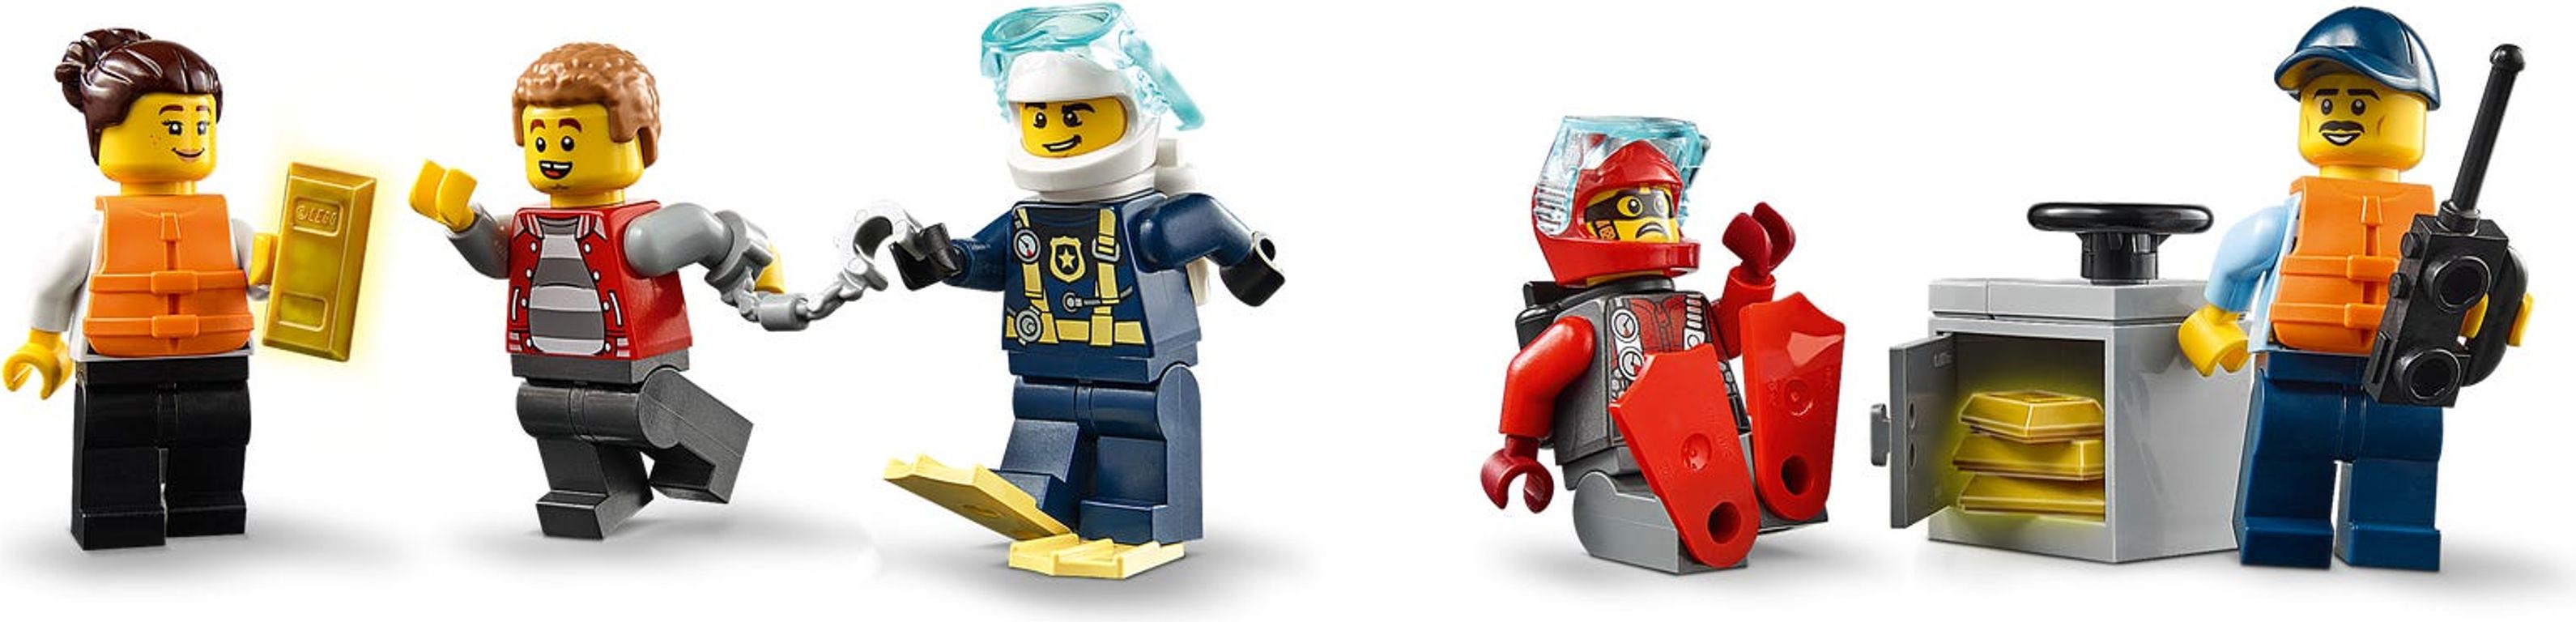 LEGO® City Police Patrol Boat minifigures